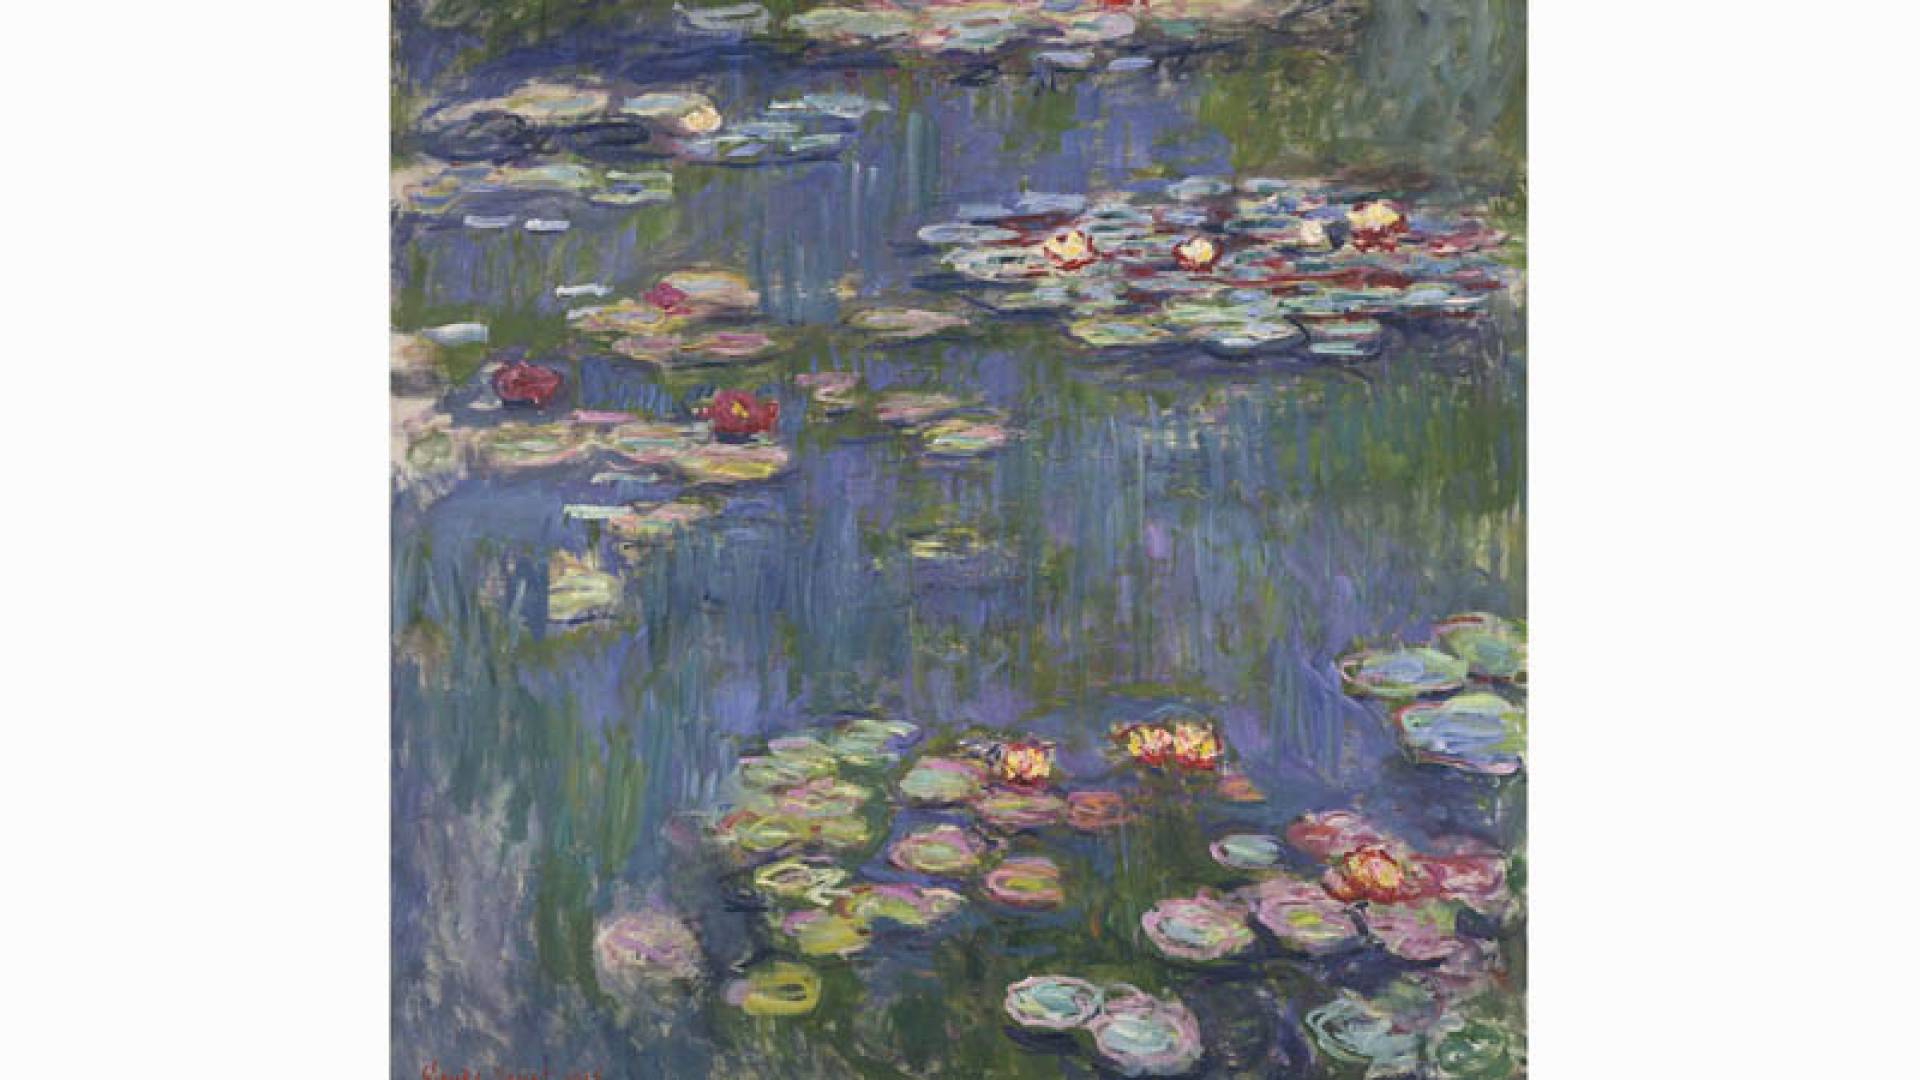 MUSEUM OF WESTERN ART, Monet Water Lilies